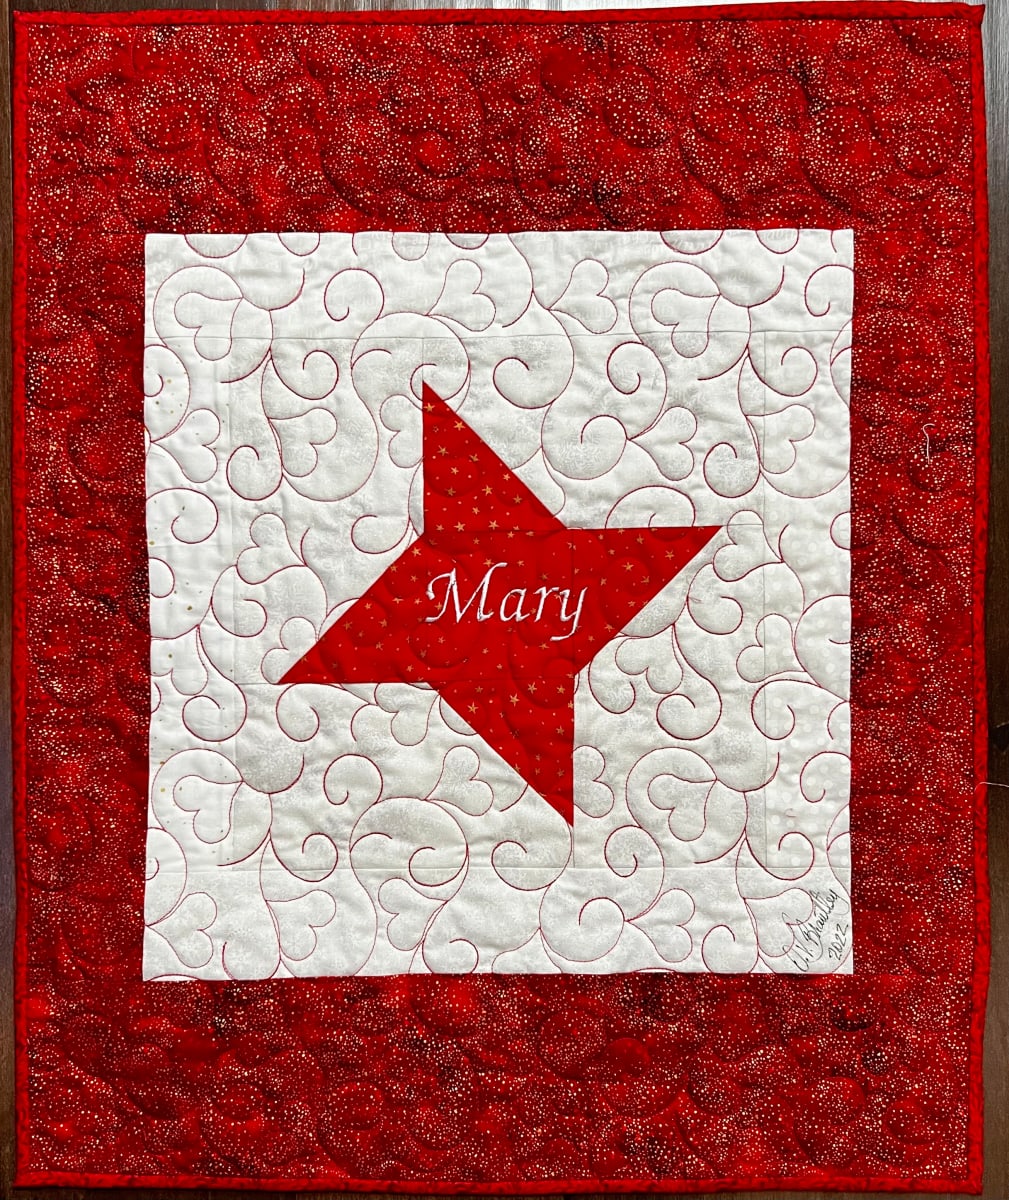 Mary’s Friendship Star by O.V. Brantley  Image: Mary’s Friendship Star